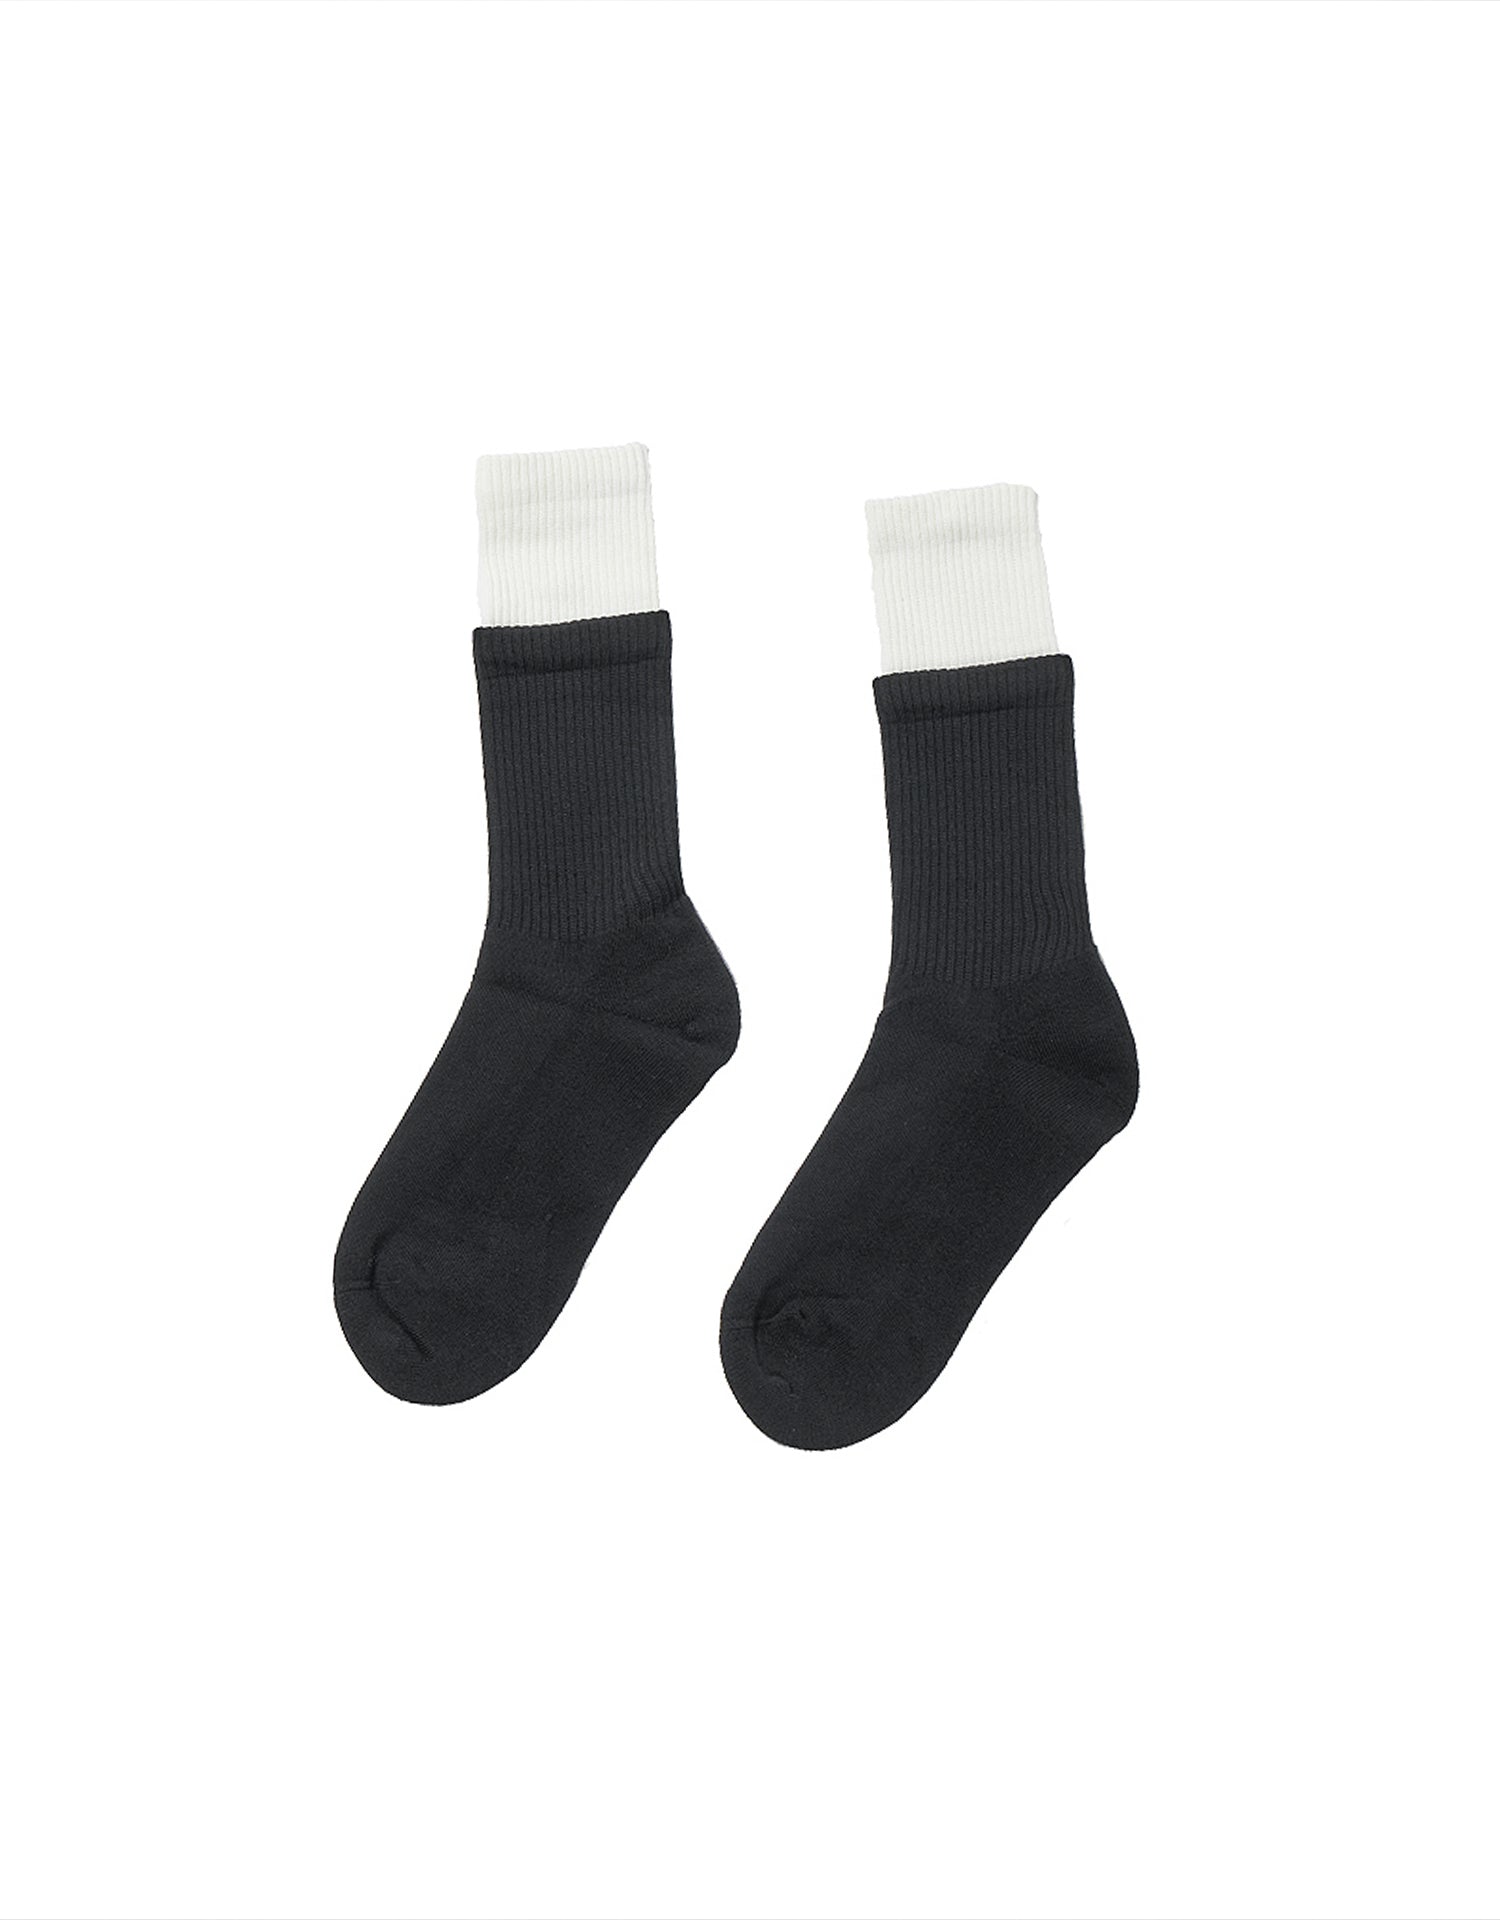 TopBasics Faked Two-Piece Socks